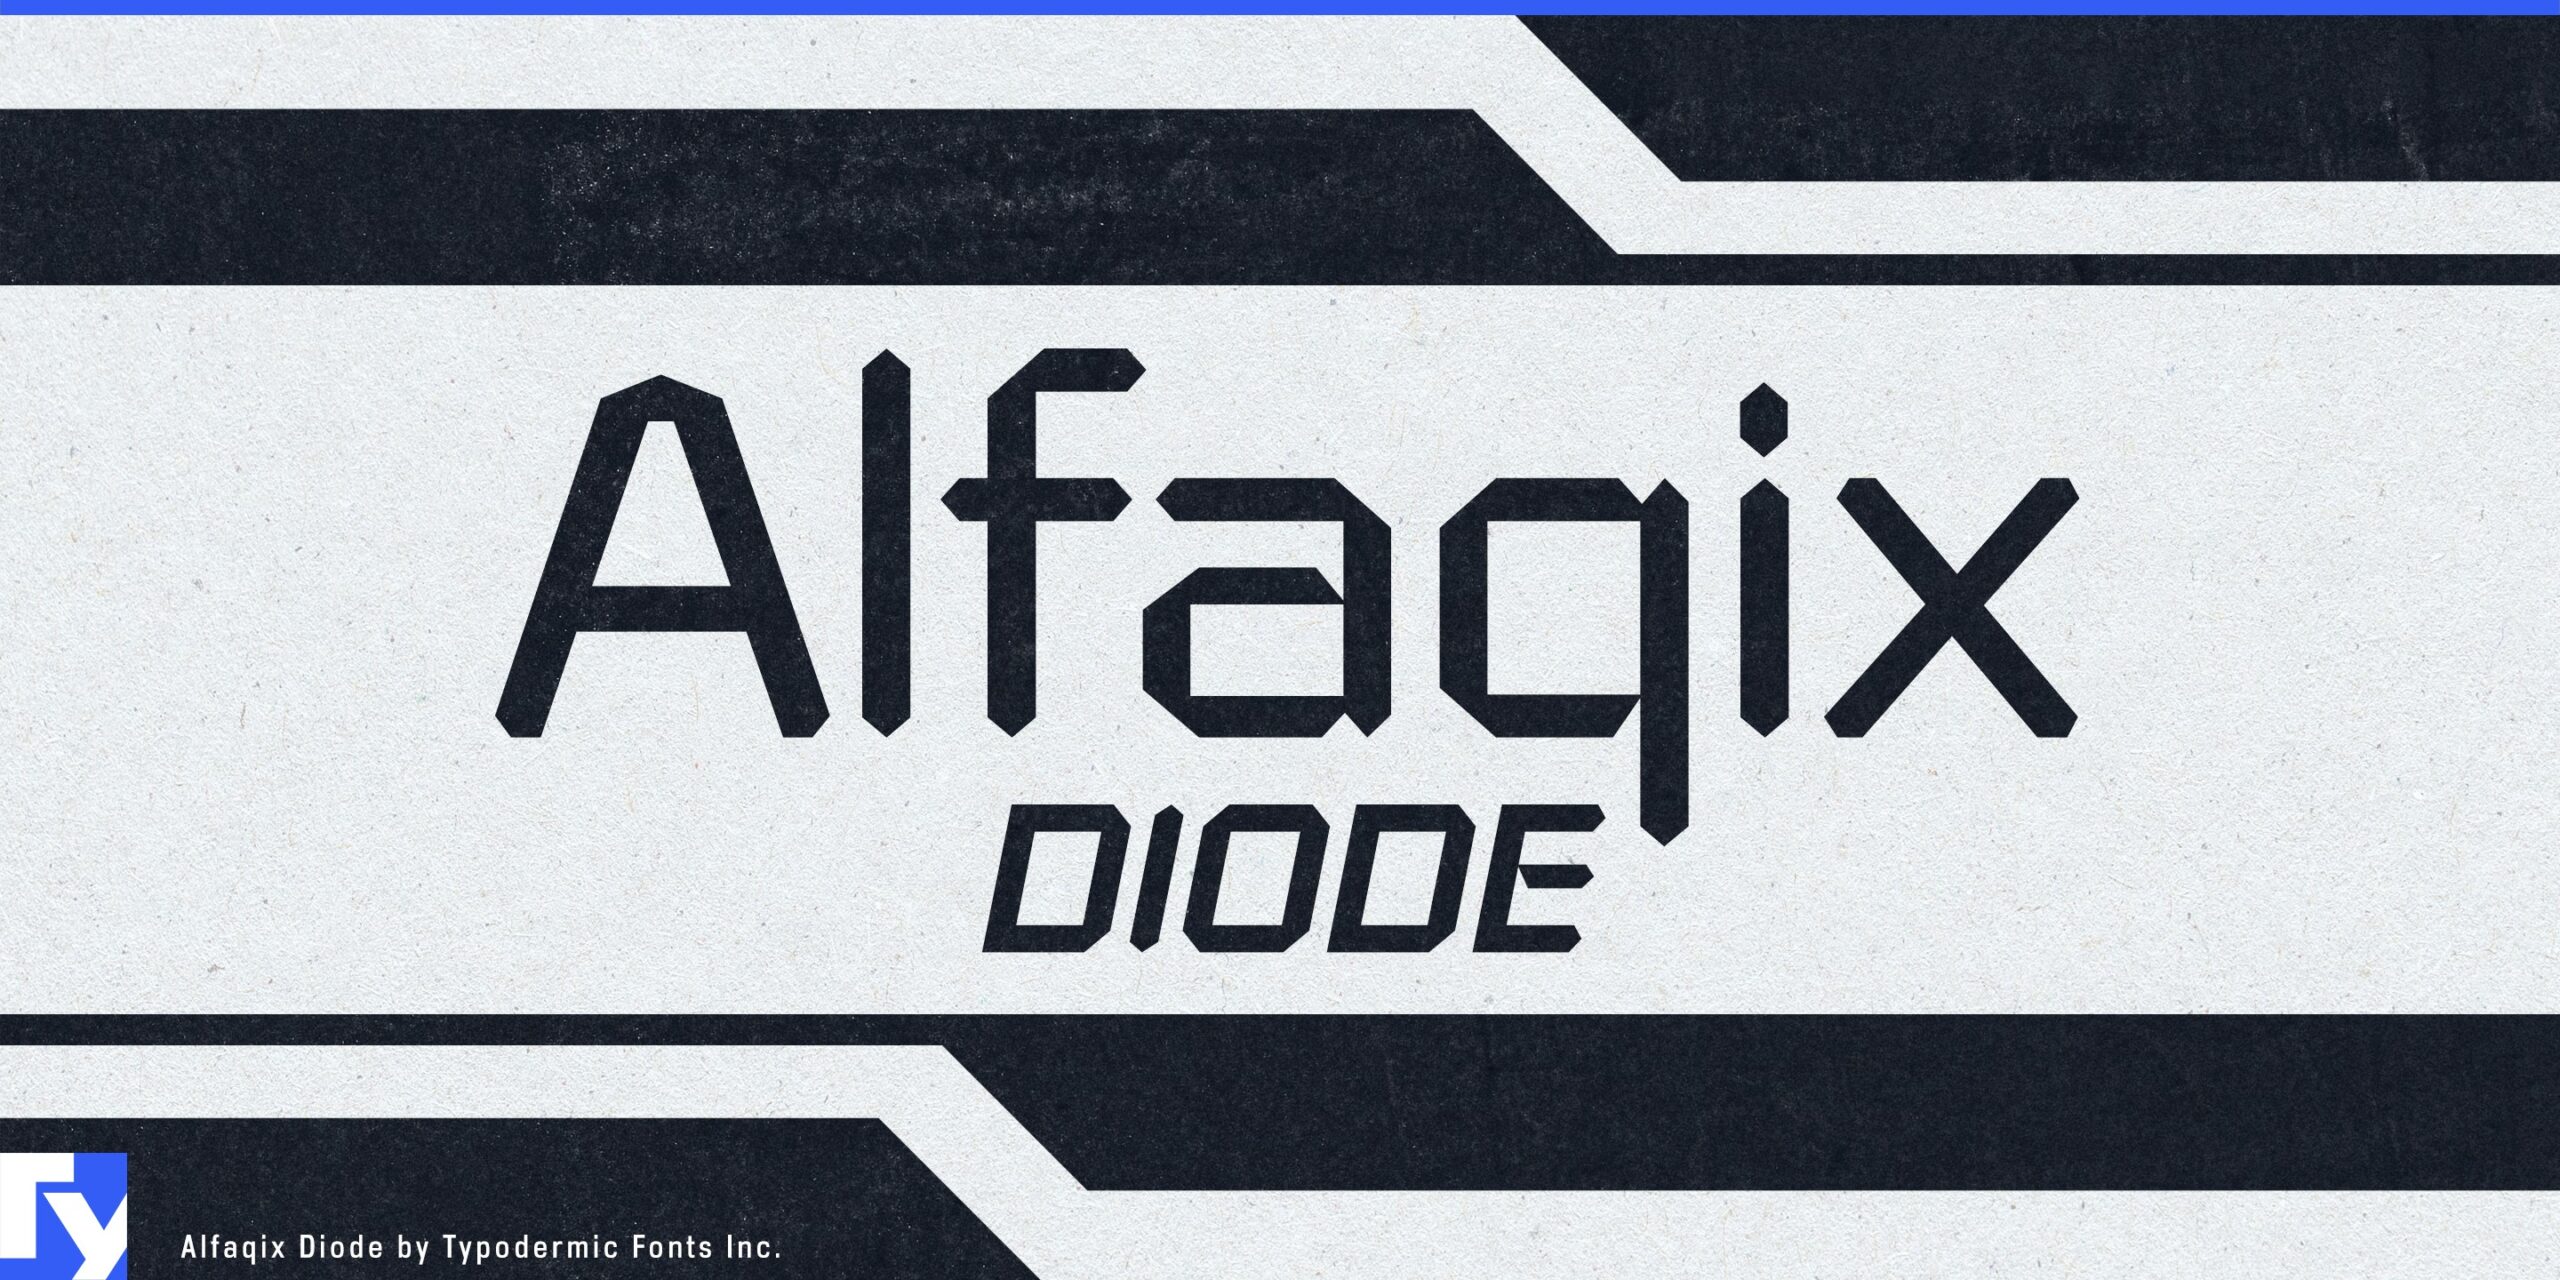 Alfaqix Diode in action: Segmented LCD digits meet digital design